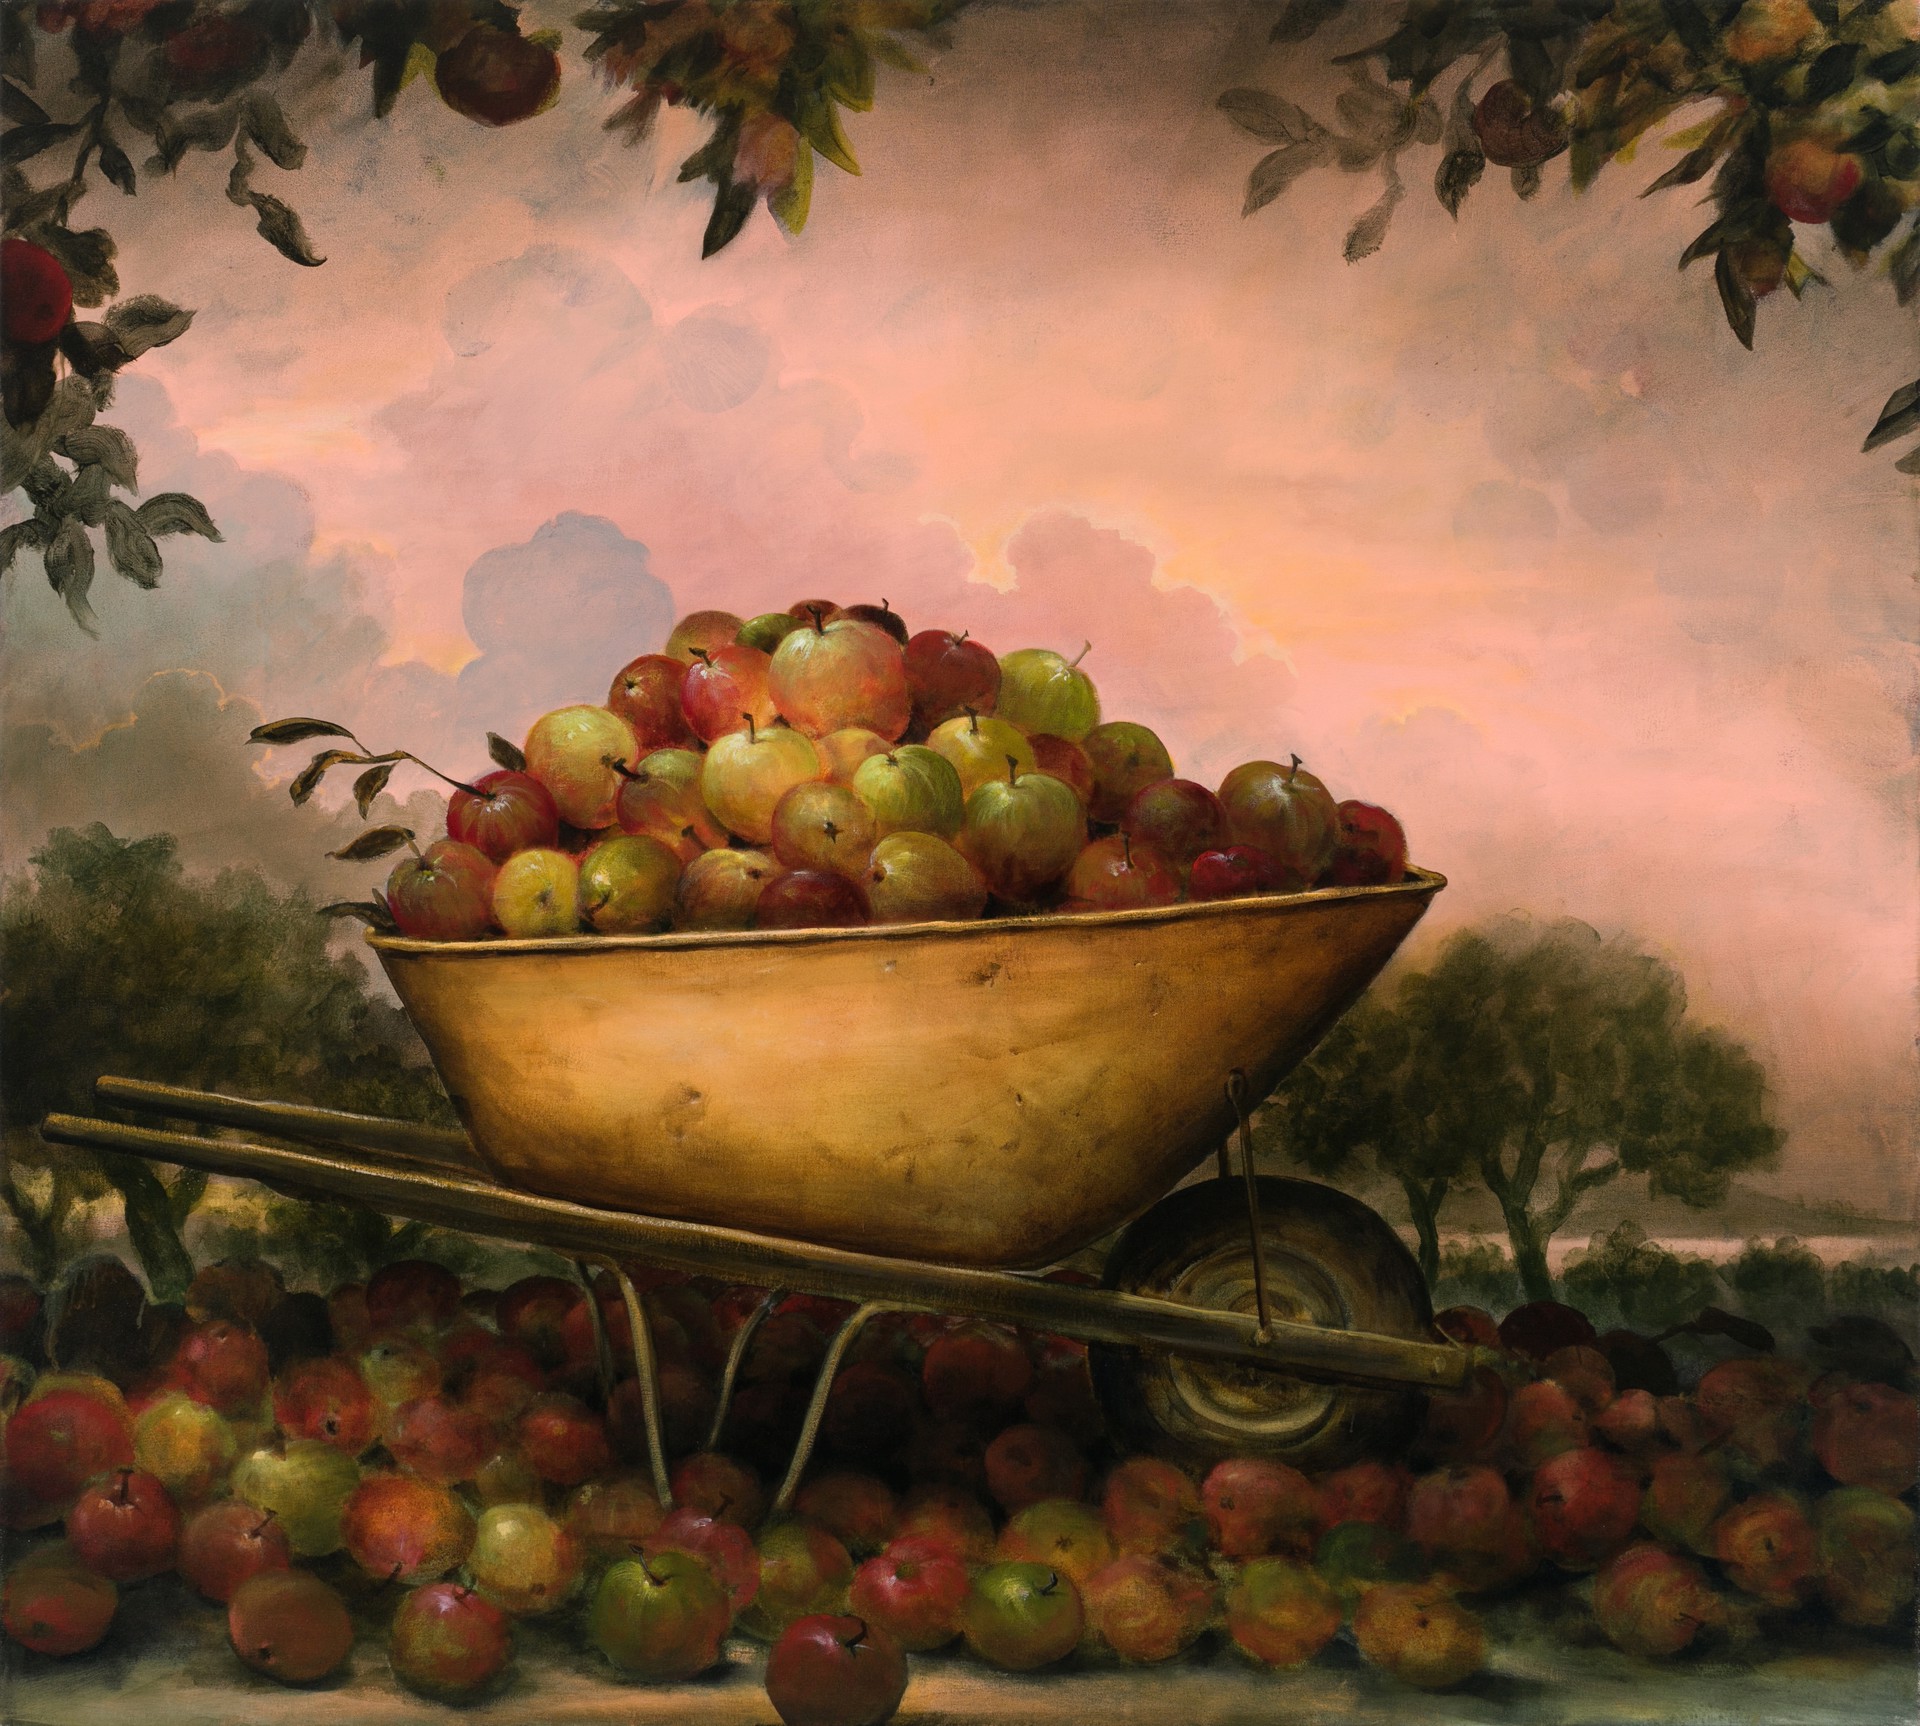 Apples I've Eaten by Kevin Sloan